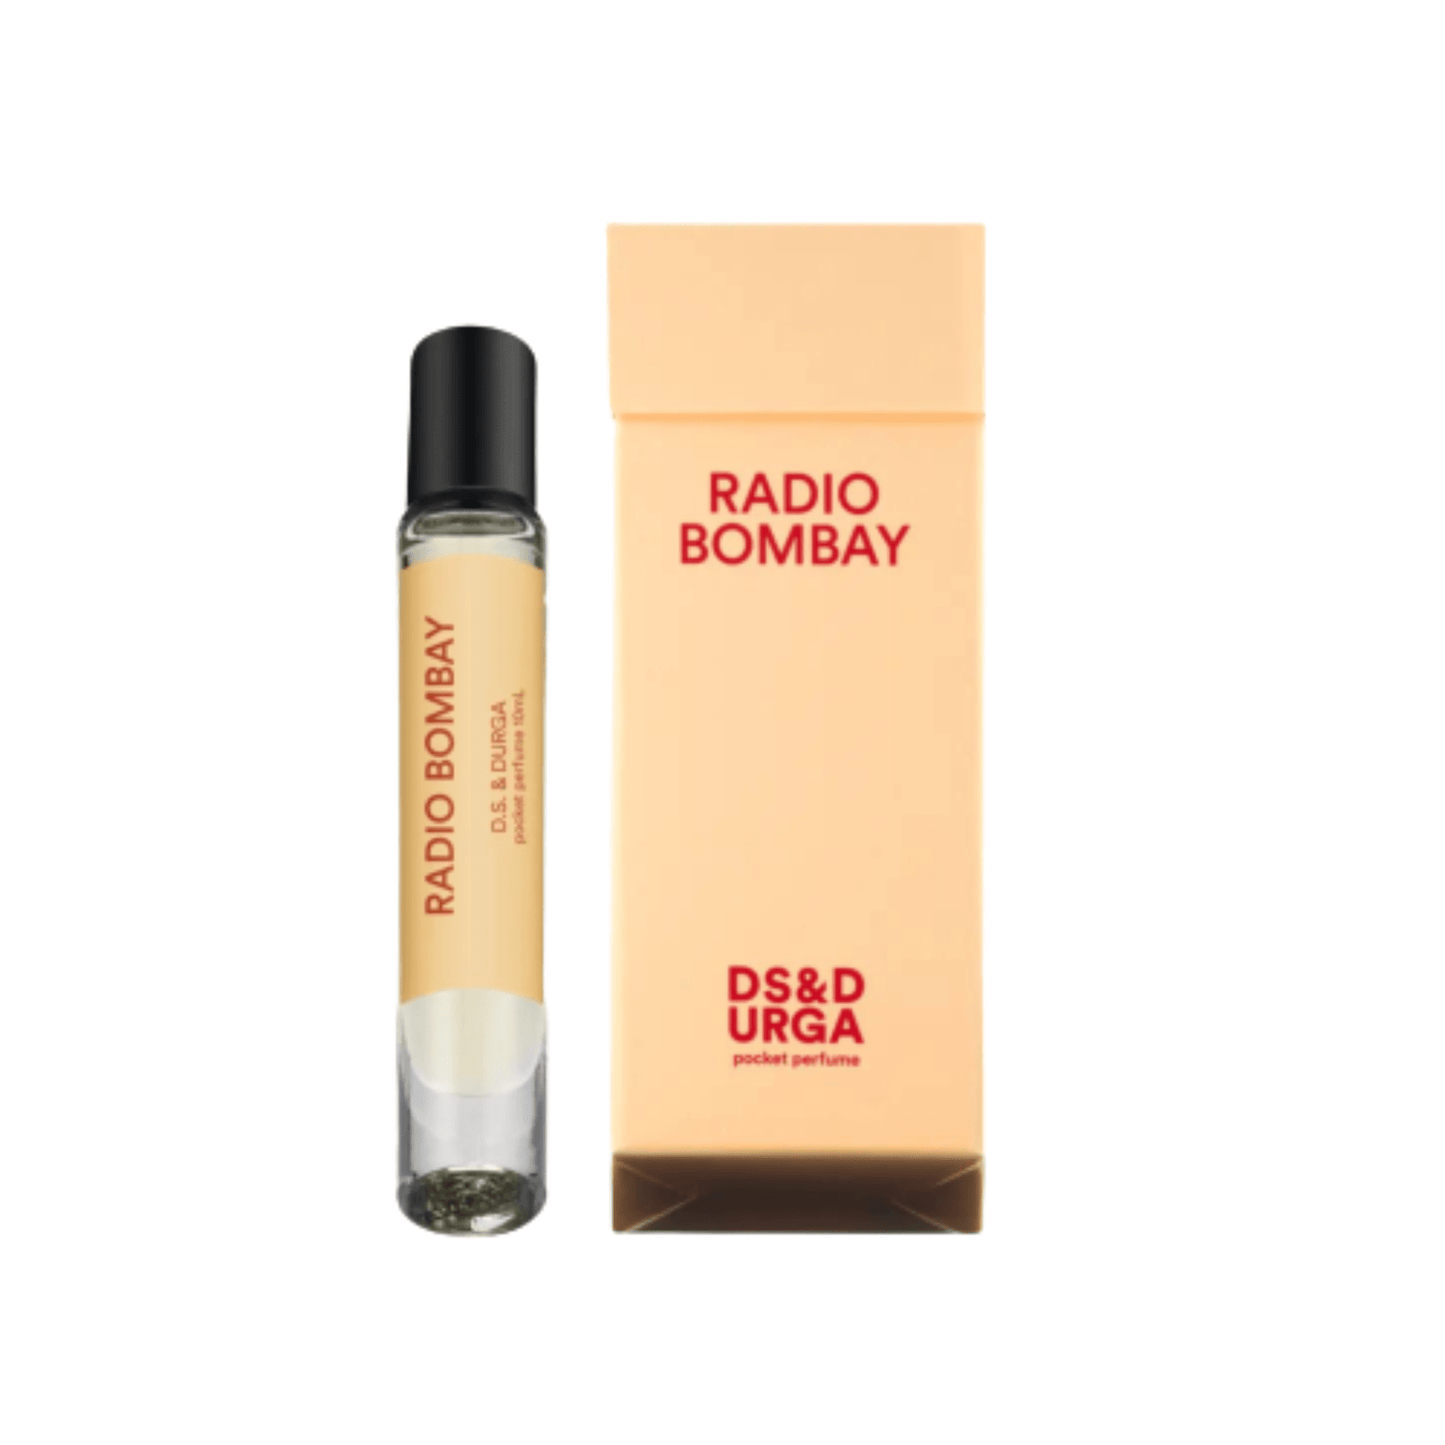 Primary Image of Pocket Perfume - Radio Bombay Roll-On Oil 